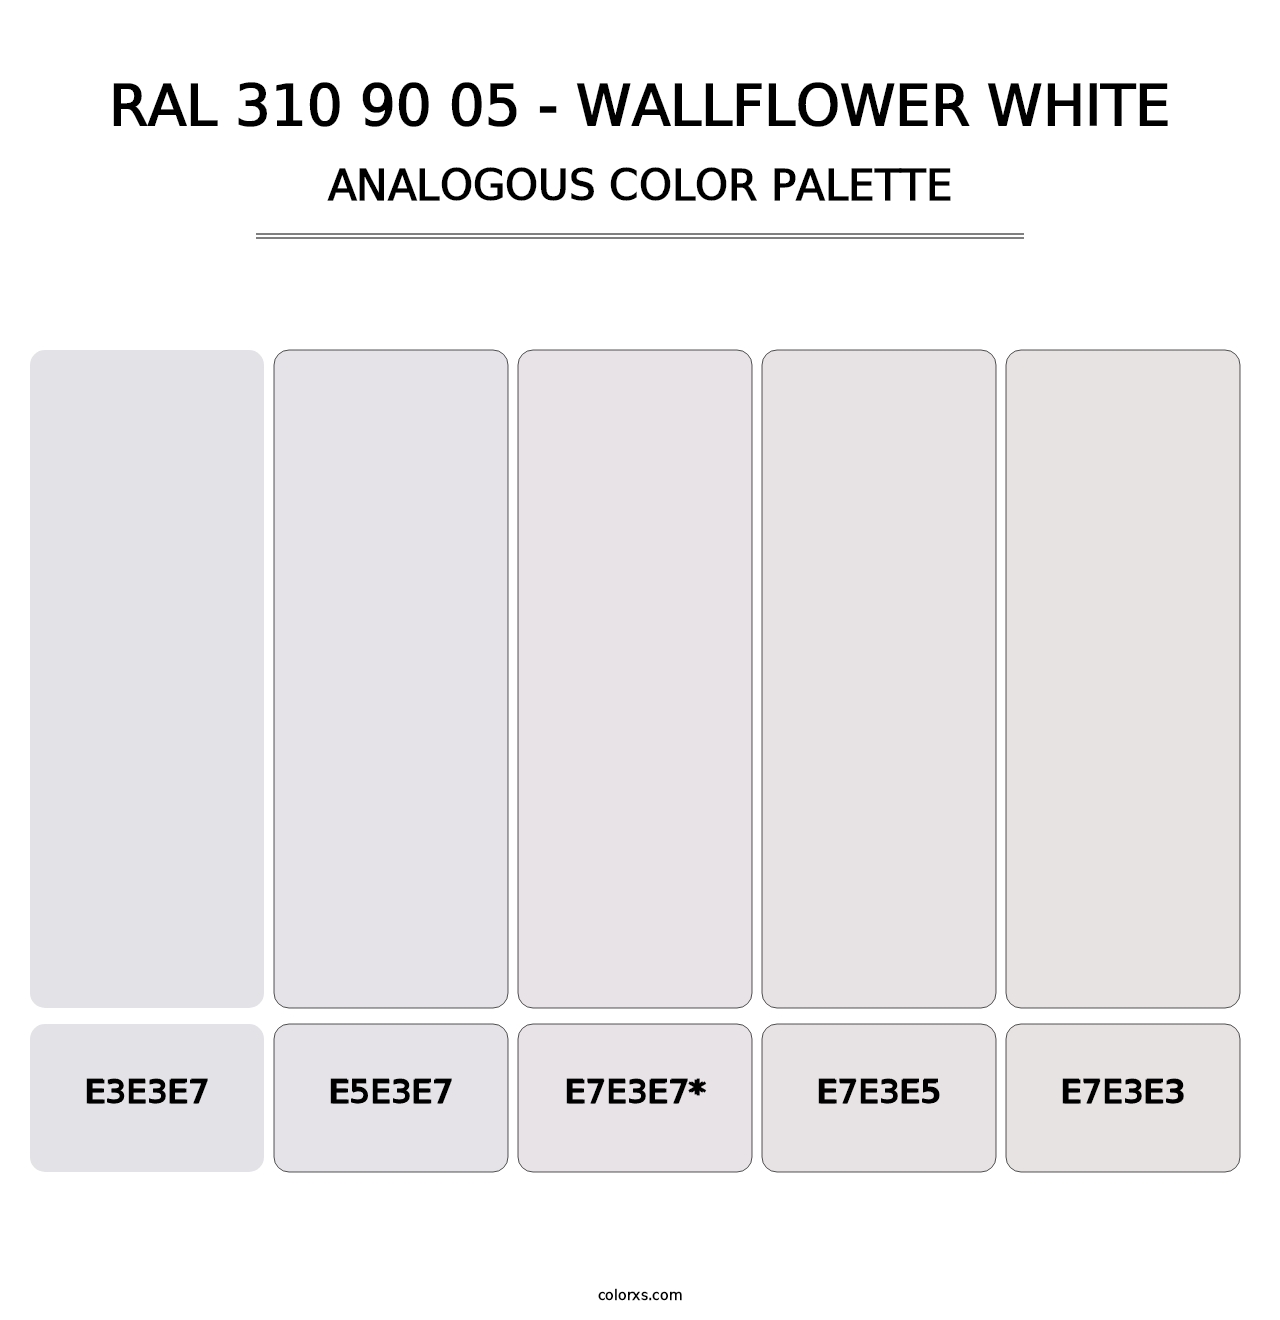 RAL 310 90 05 - Wallflower White - Analogous Color Palette